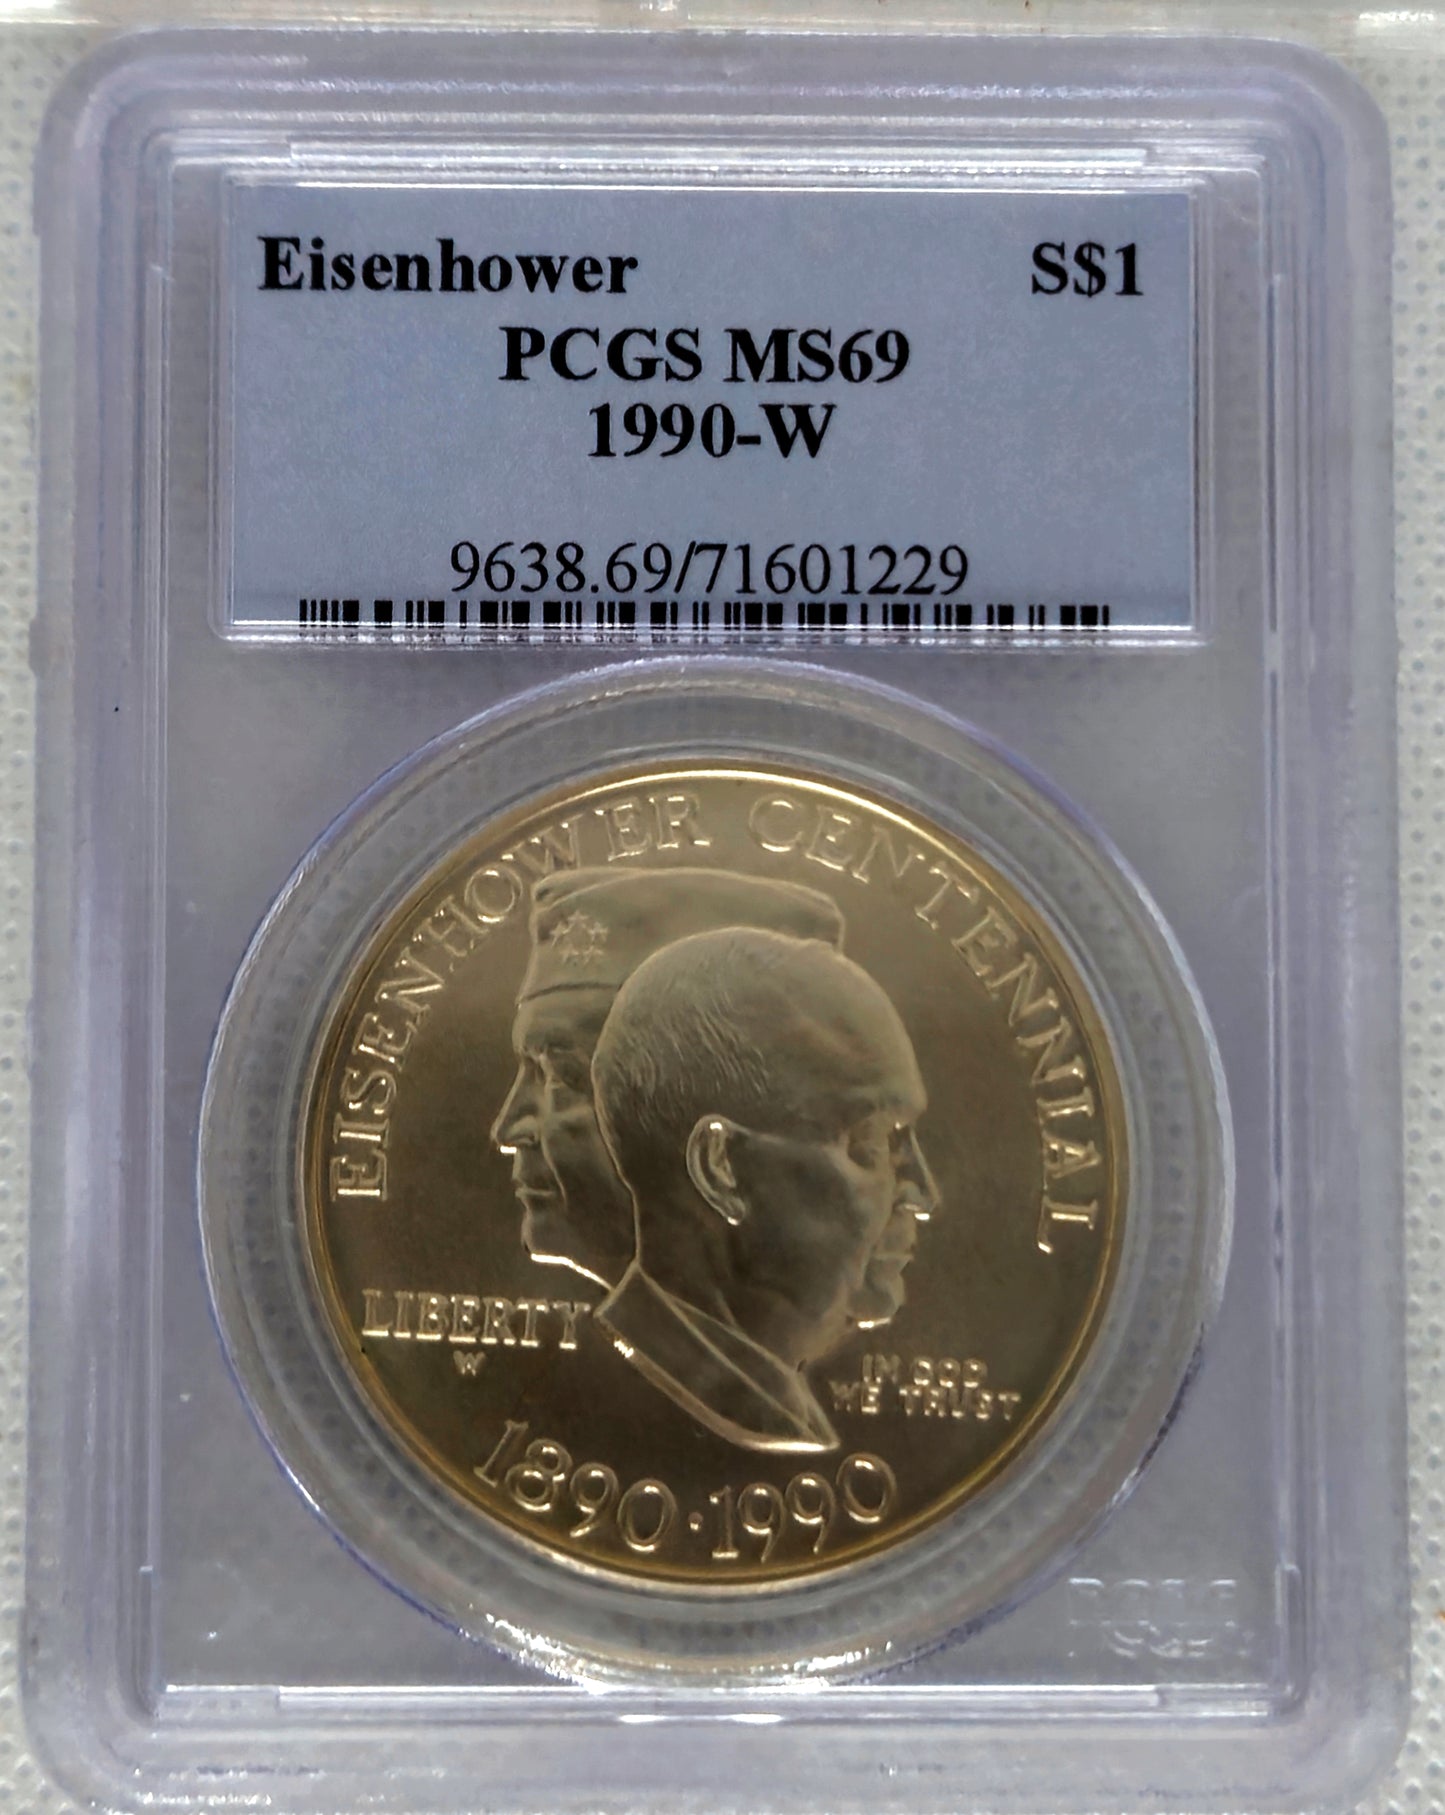 1990-W Eisenhower Centennial PCGS MS 69 Commemorative Silver Dollar